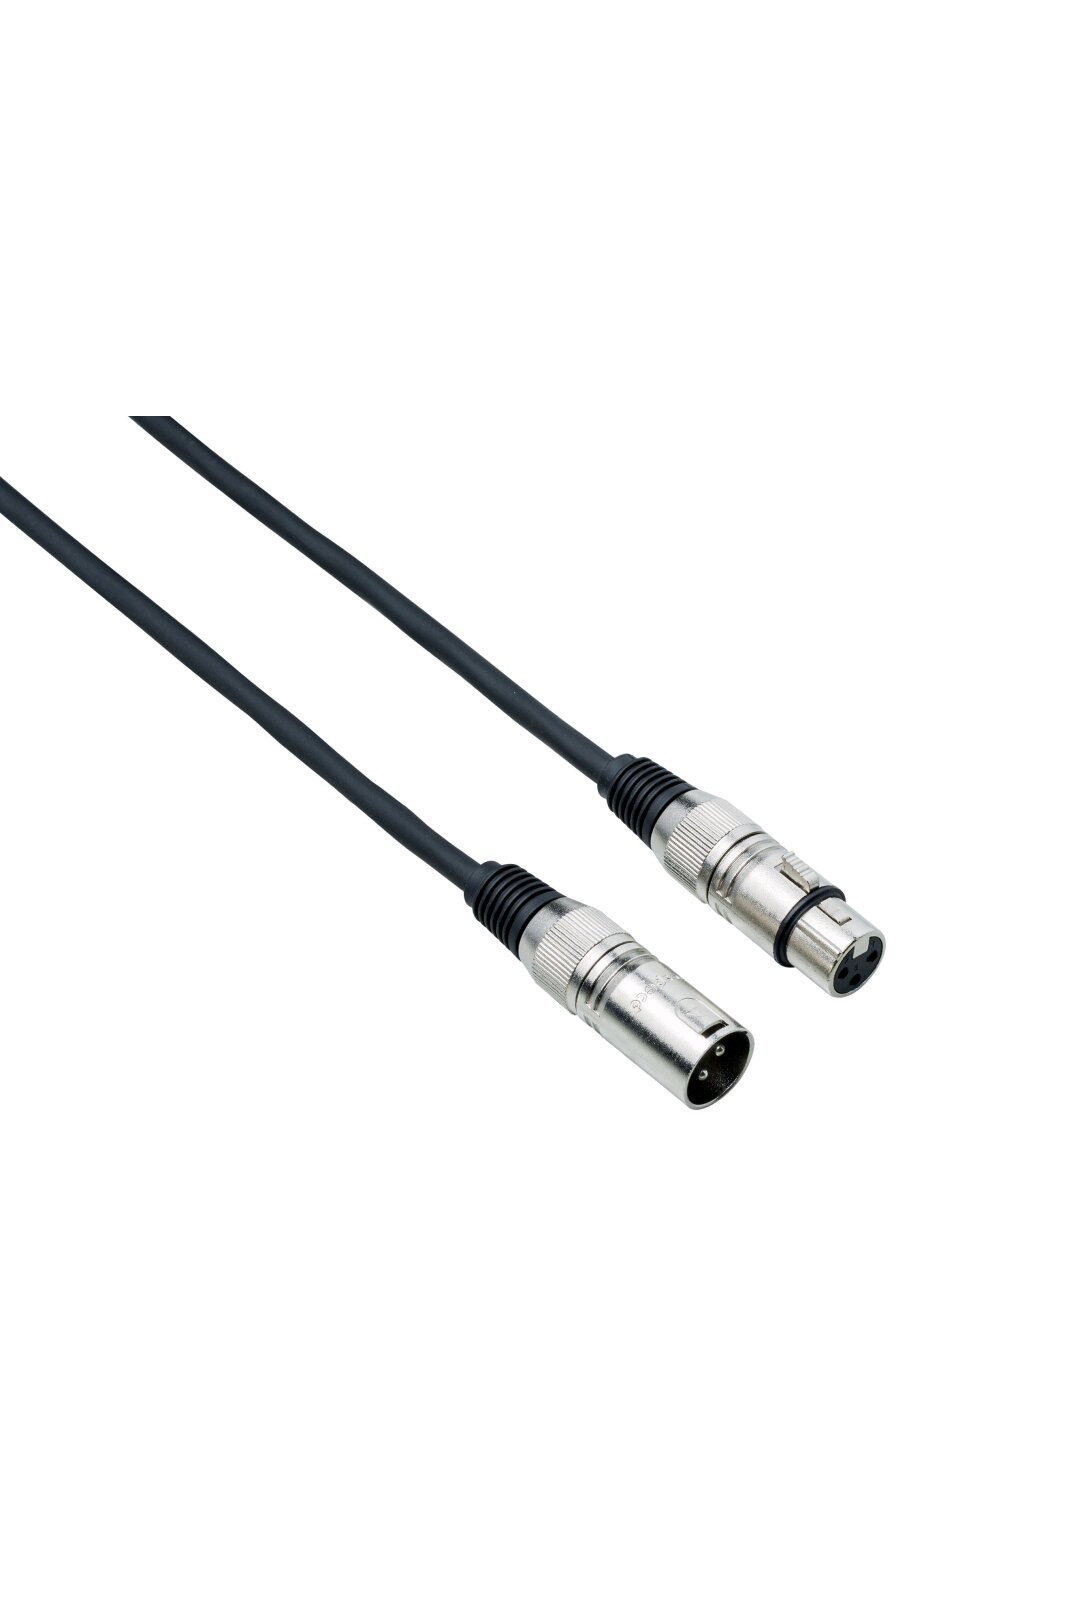 Bespeco DMX010 câble DMX 10 m : photo 1